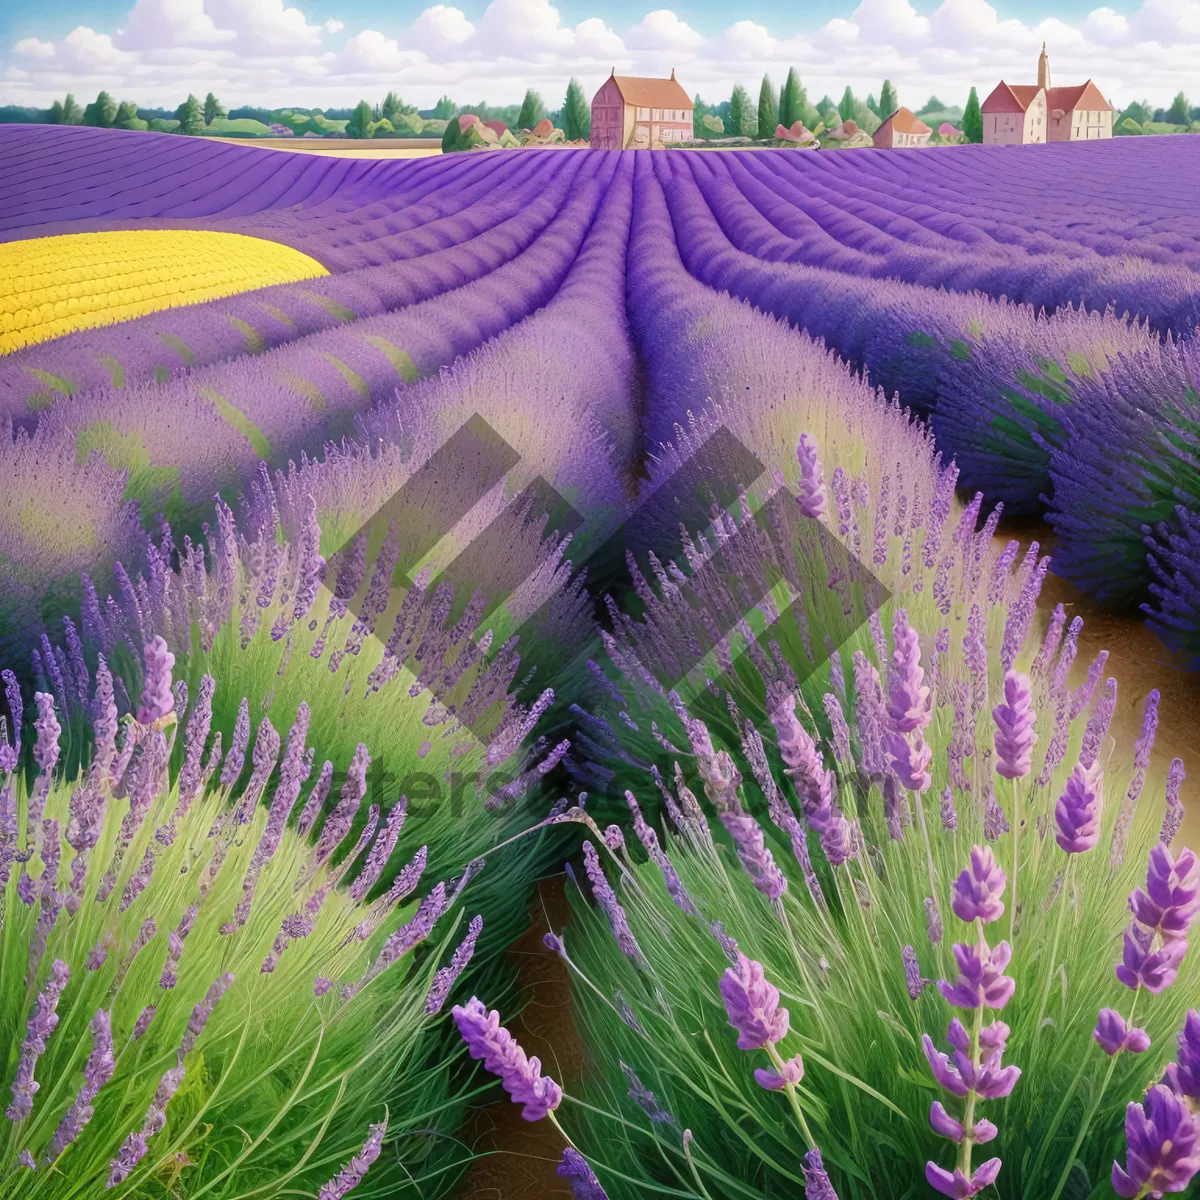 Picture of Vibrant Lavender Blooms in a Rural Landscape